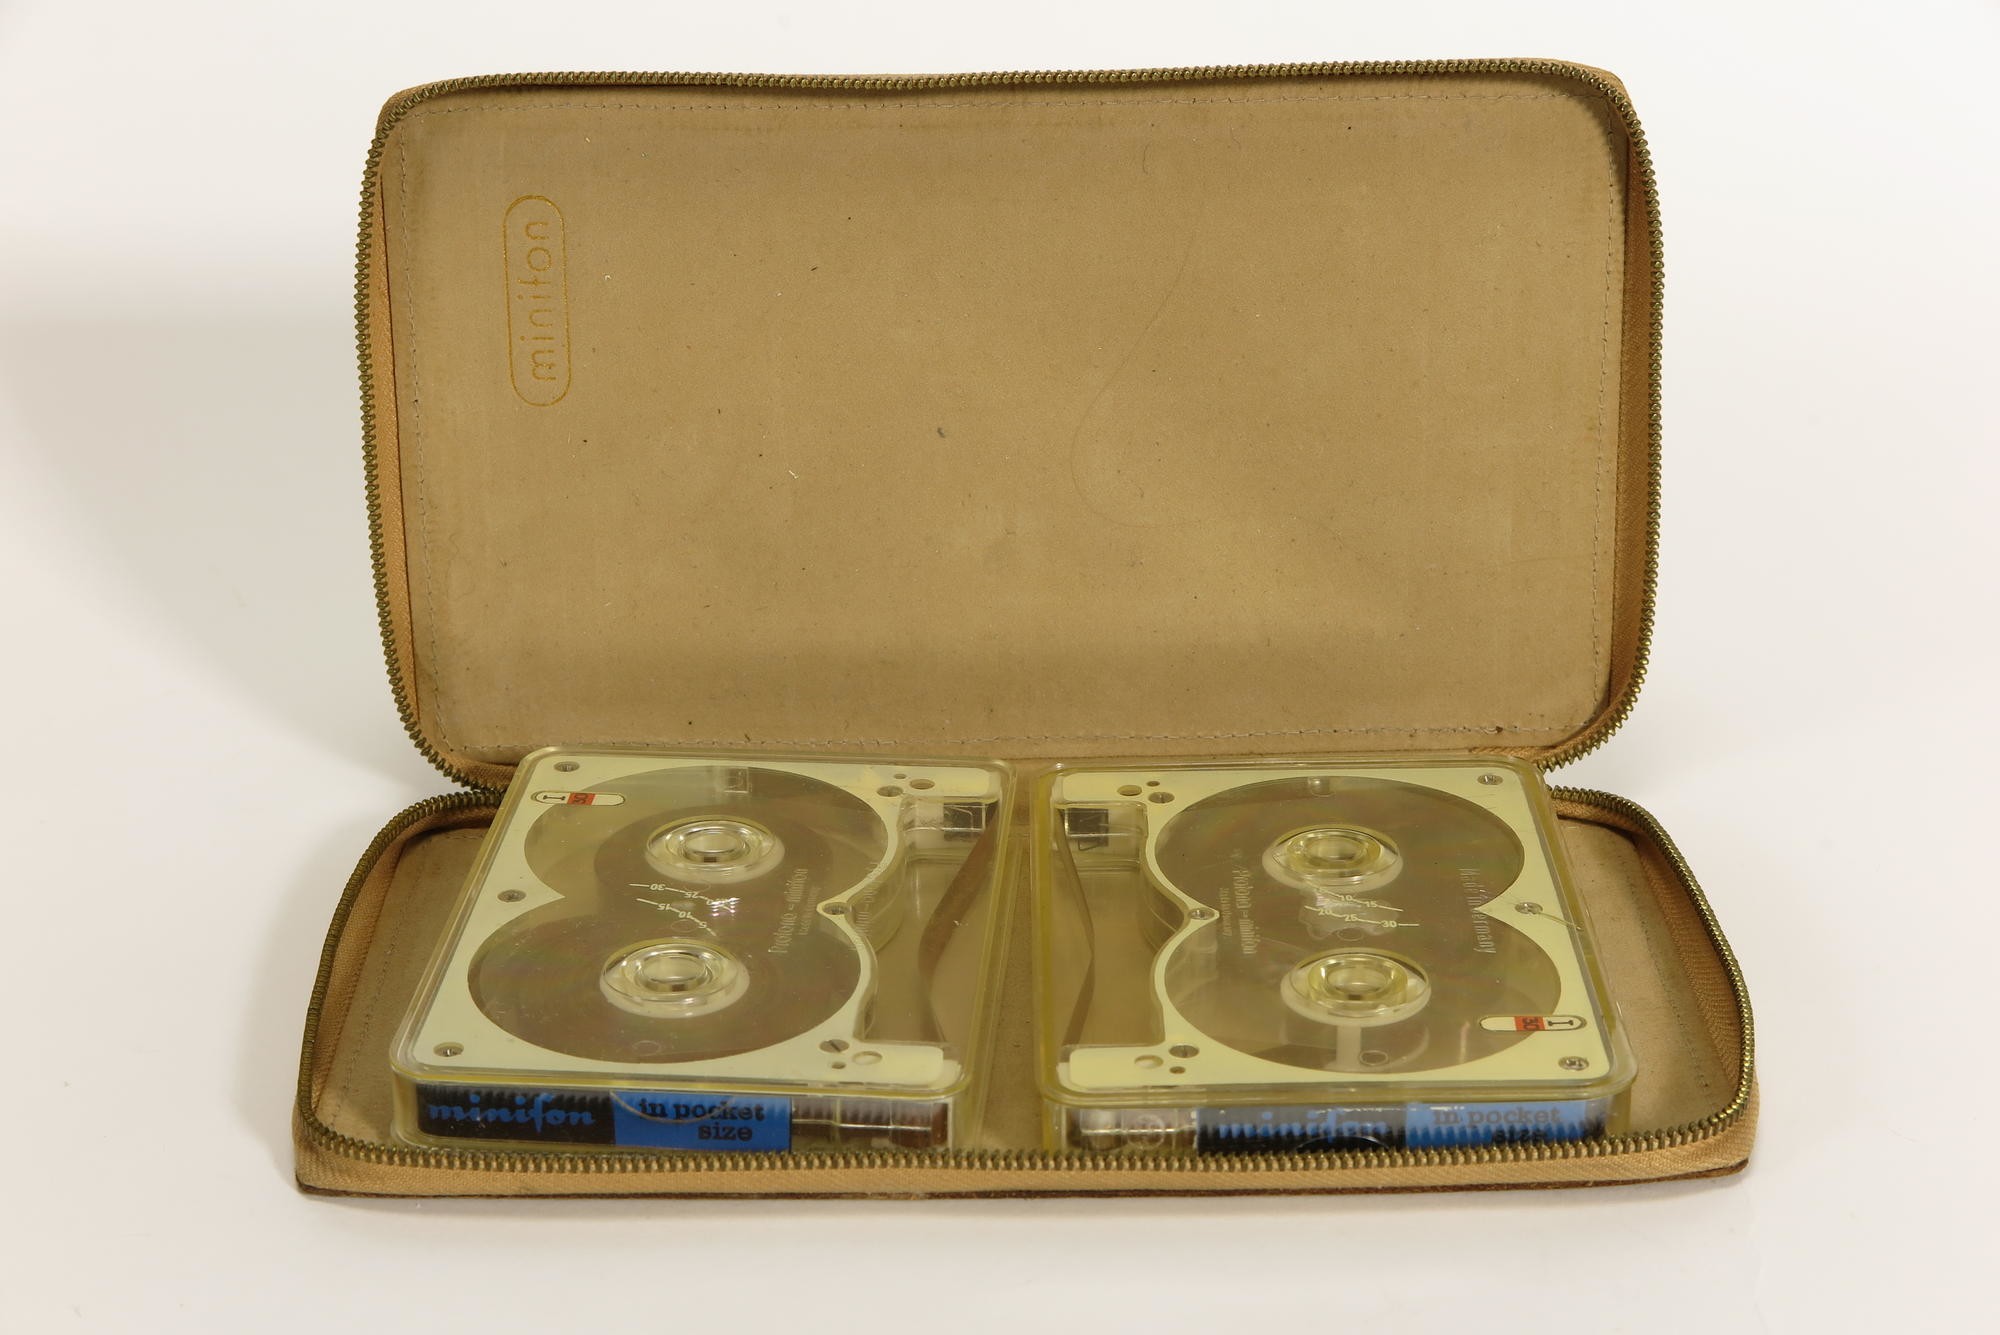 Ledertasche mit zwei Tonbandkassetten in Kunststoffschachteln, Zubehör zu Diktiergerät Protona Minifon Attaché (Stiftung Deutsches Technikmuseum Berlin CC0)